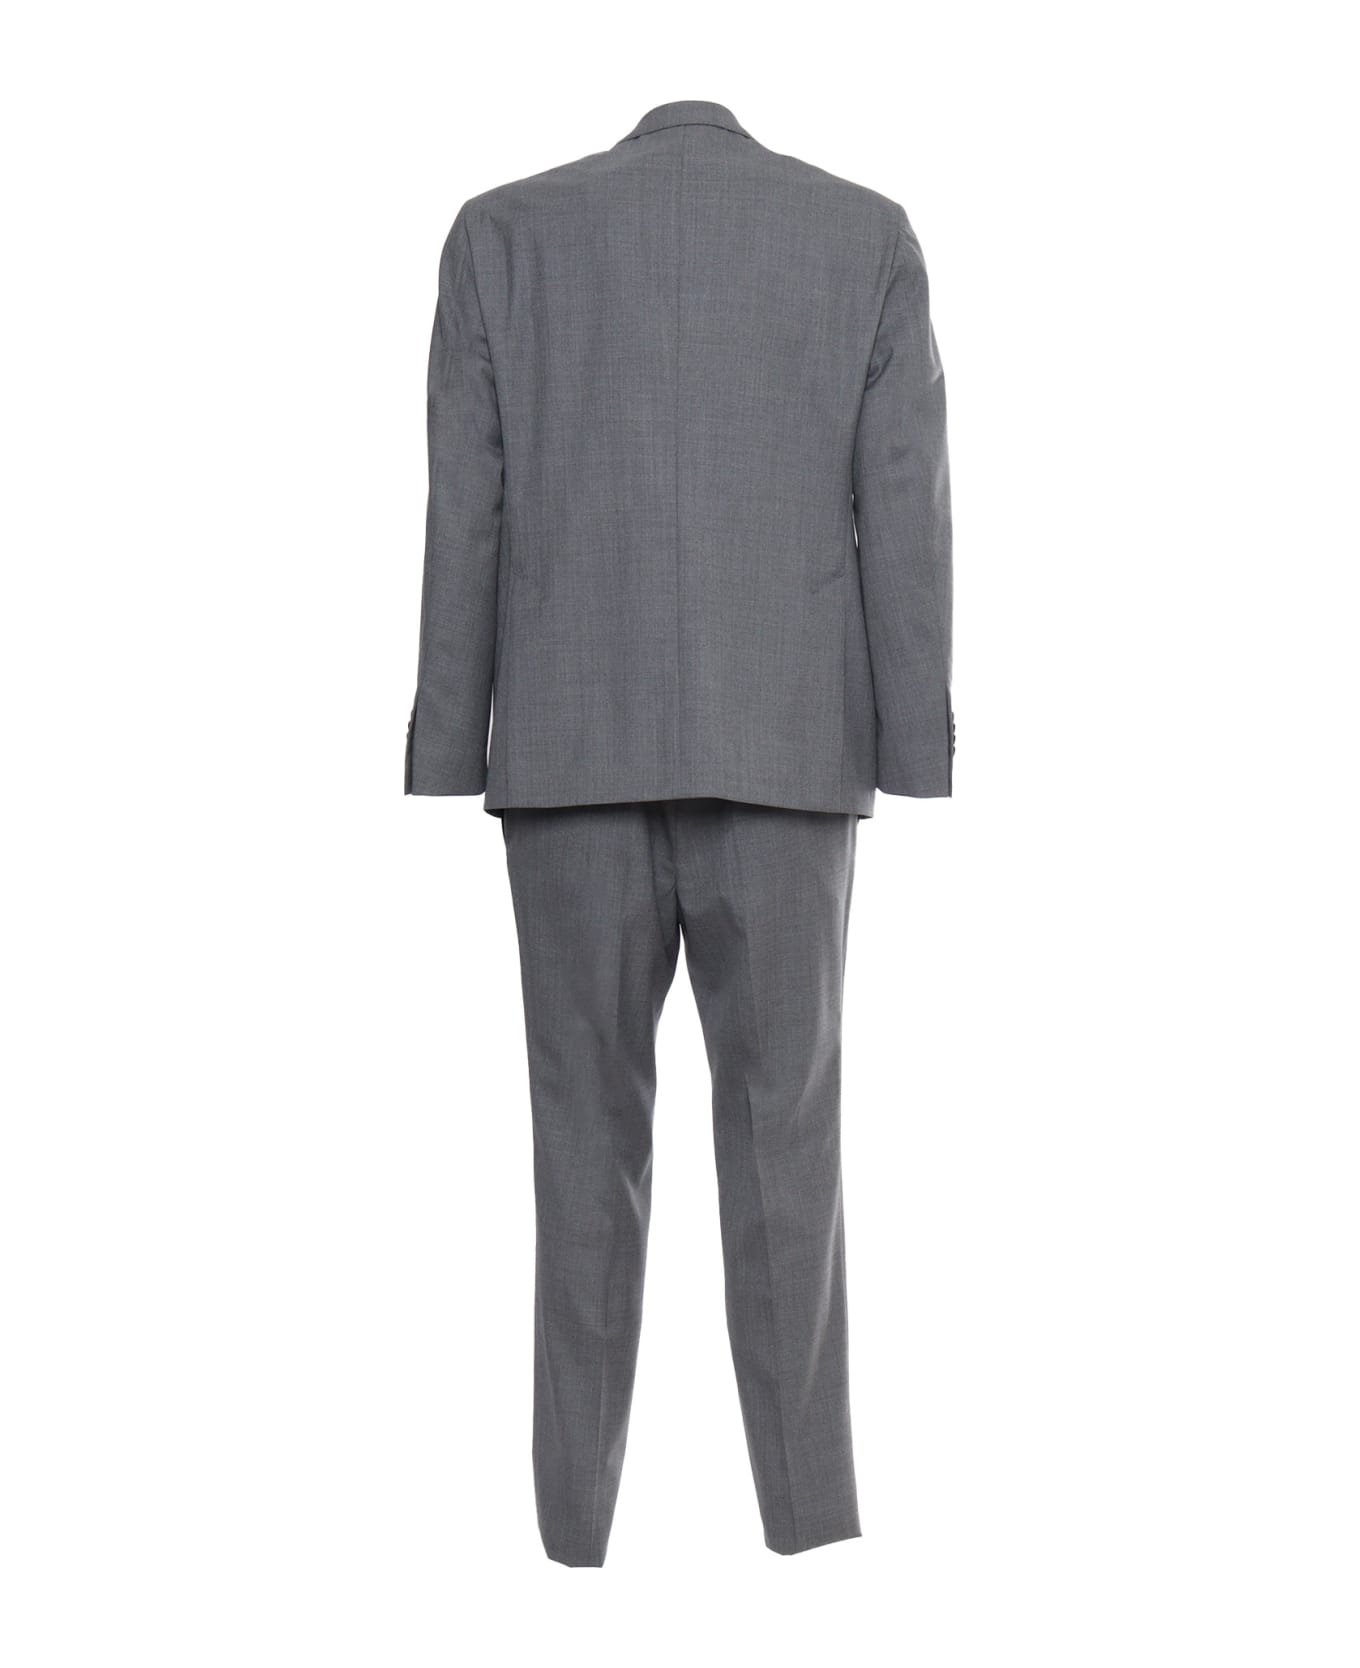 Luigi Bianchi Mantova Gray Men's Suit - GREY